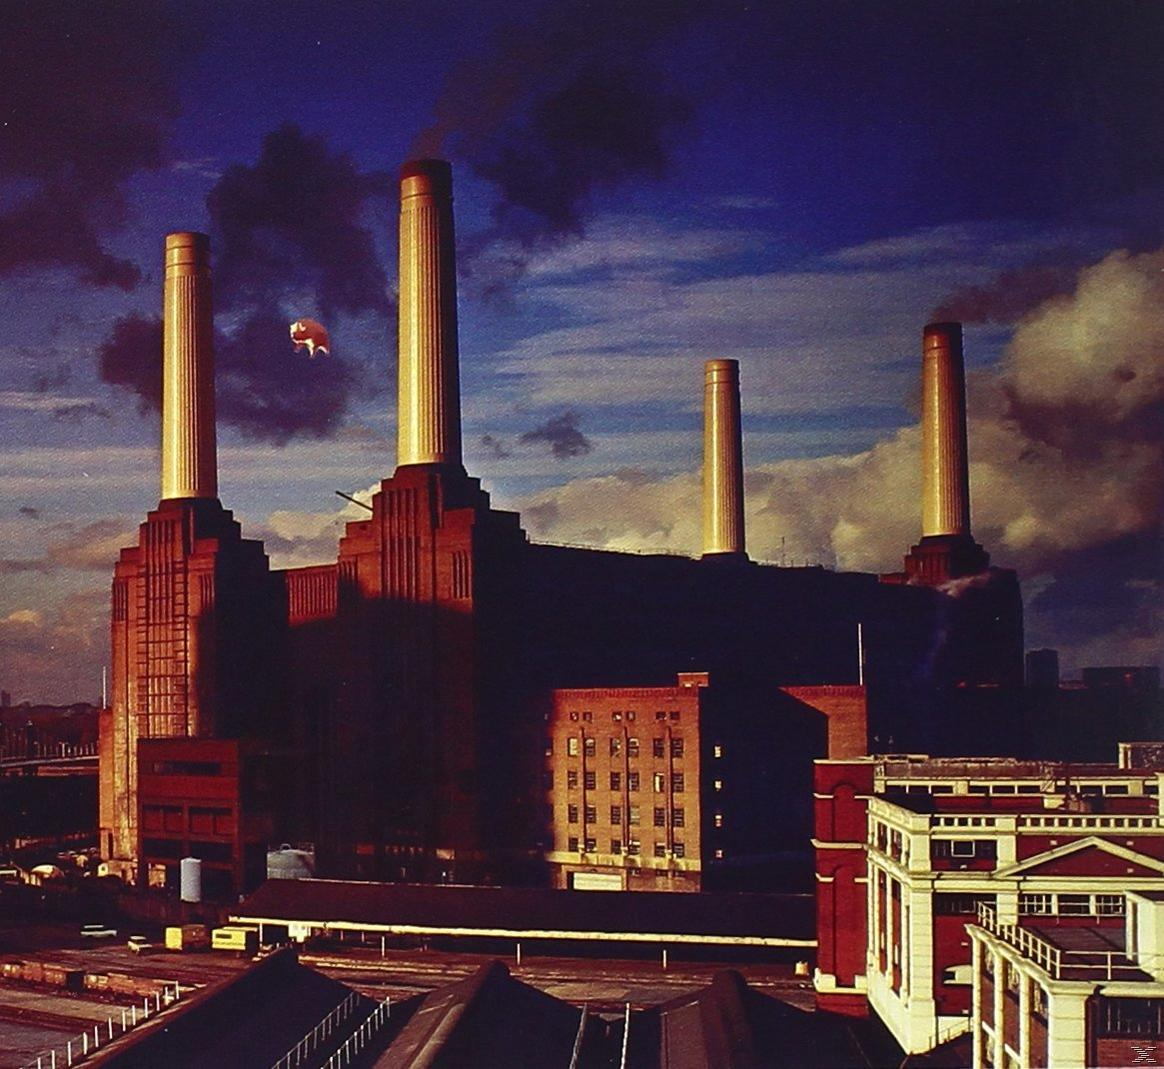 Pink Floyd - Animals (CD) 